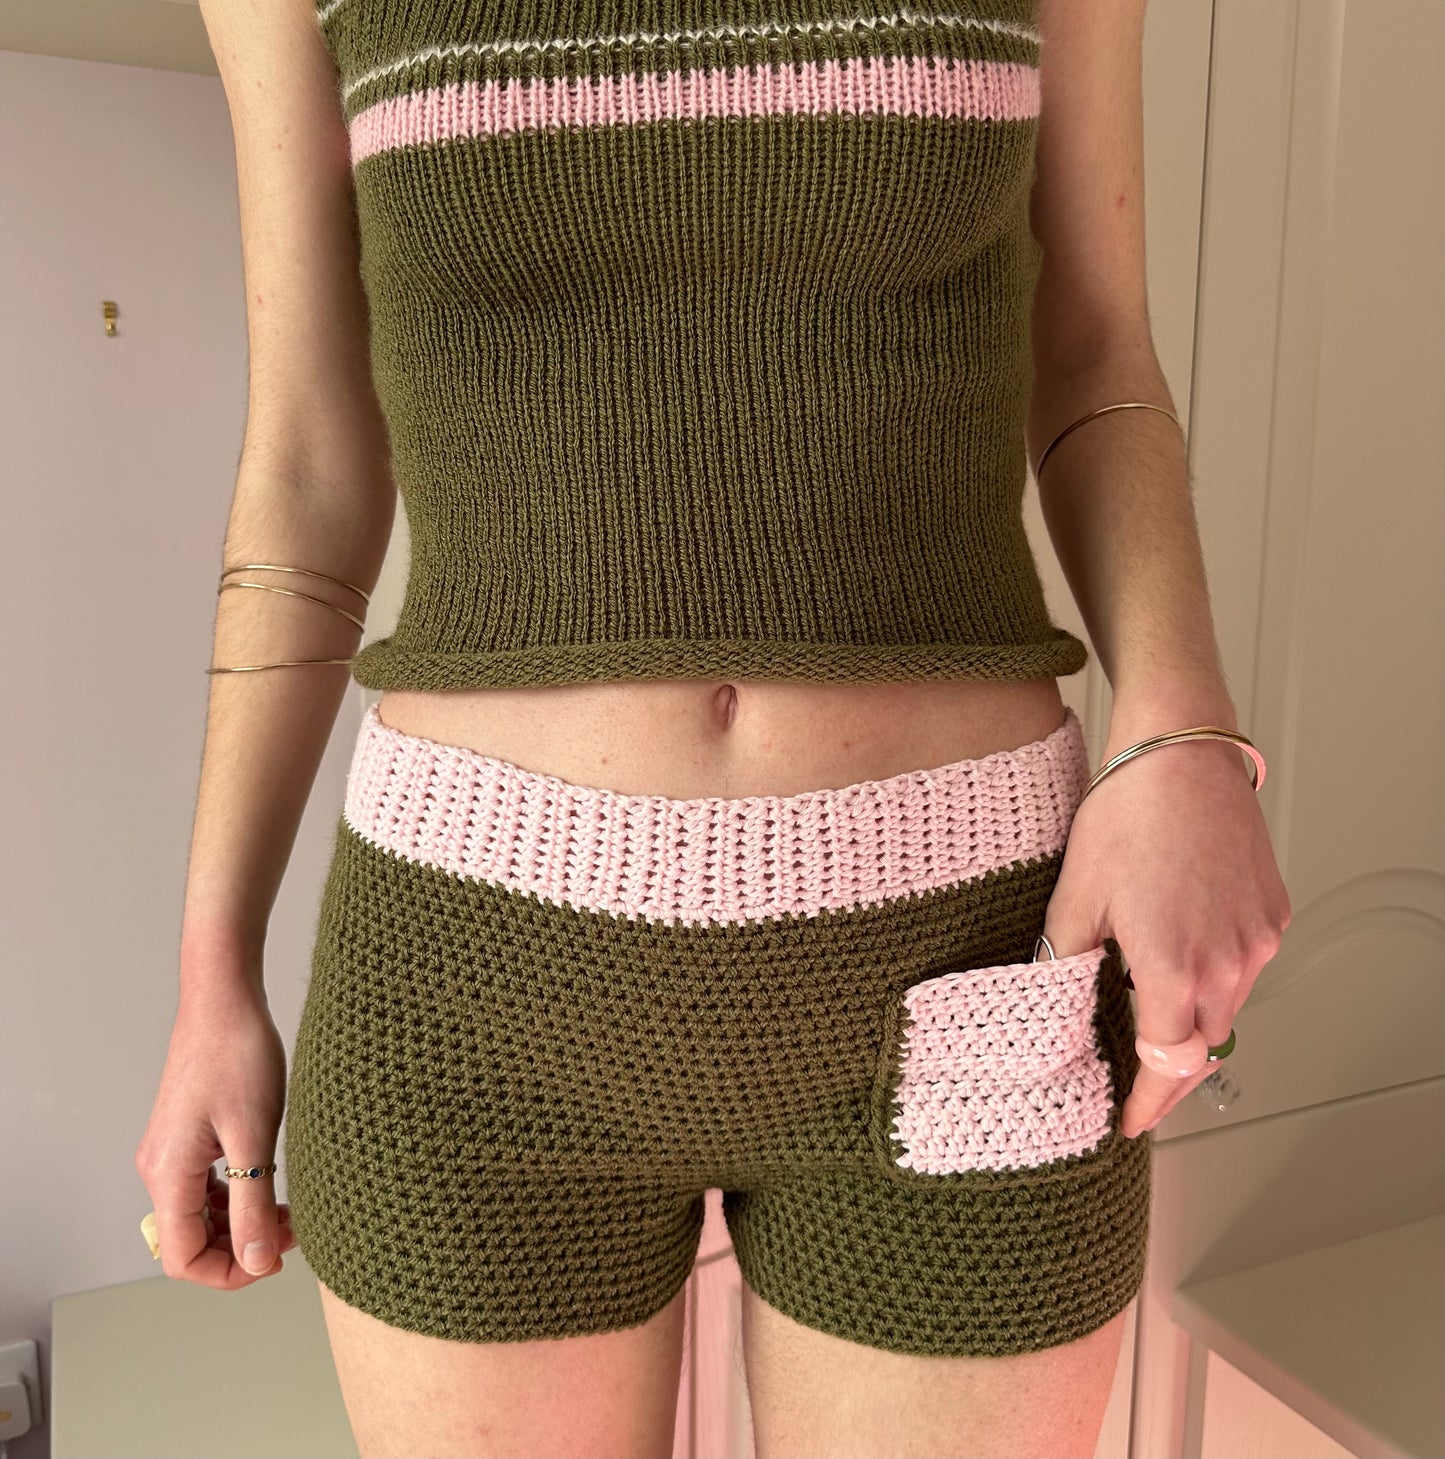 The Jade Shorts - handmade crochet shorts in khaki and baby pink with pocket